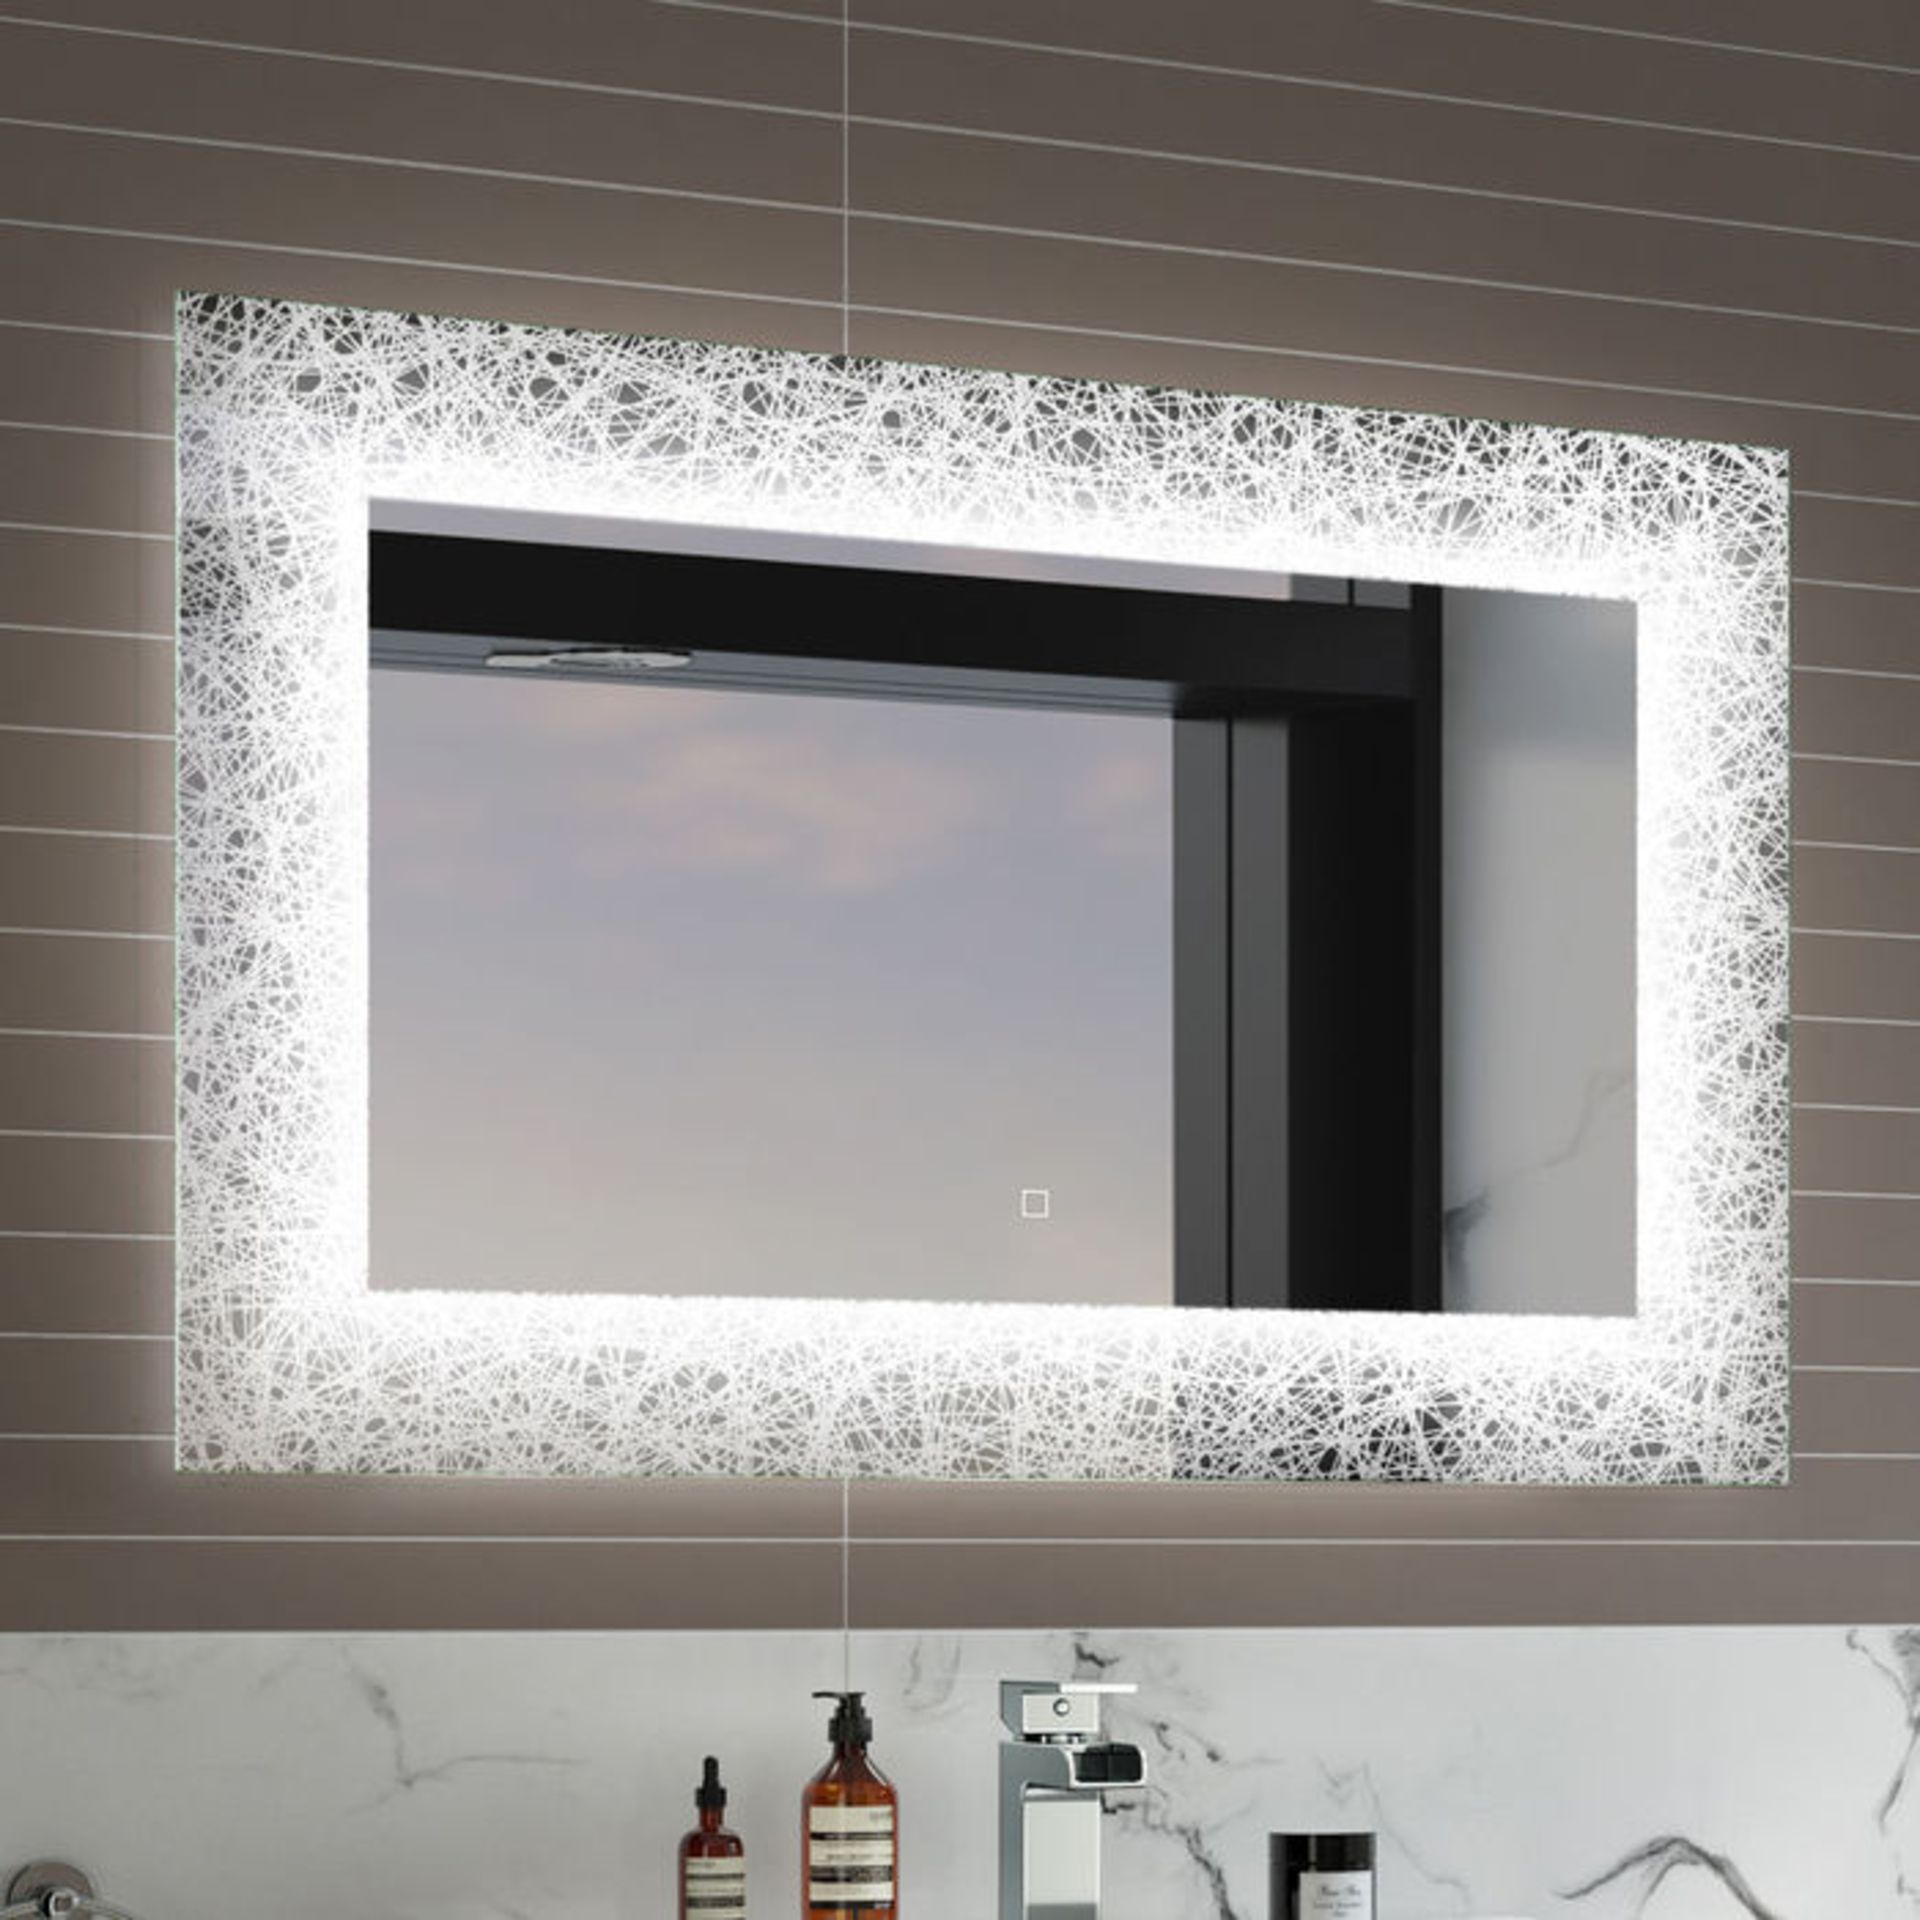 (KL189) 900x600mm Celestial Designer Illuminated LED Mirror - Switch Control. RRP £399.99. We love - Image 5 of 6